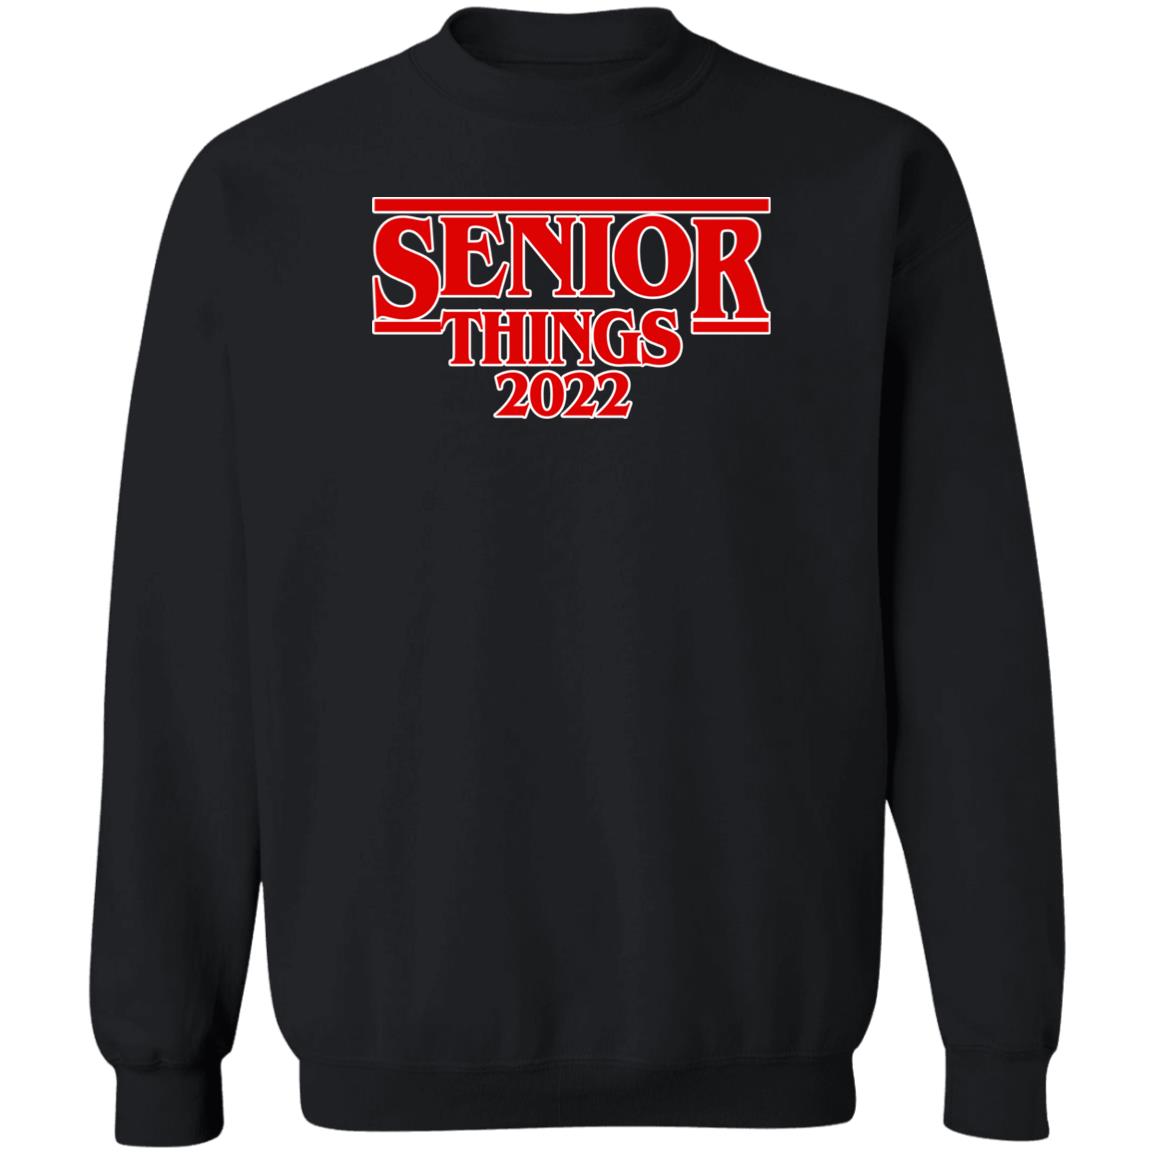 Senior Things 2022 Shirt 2